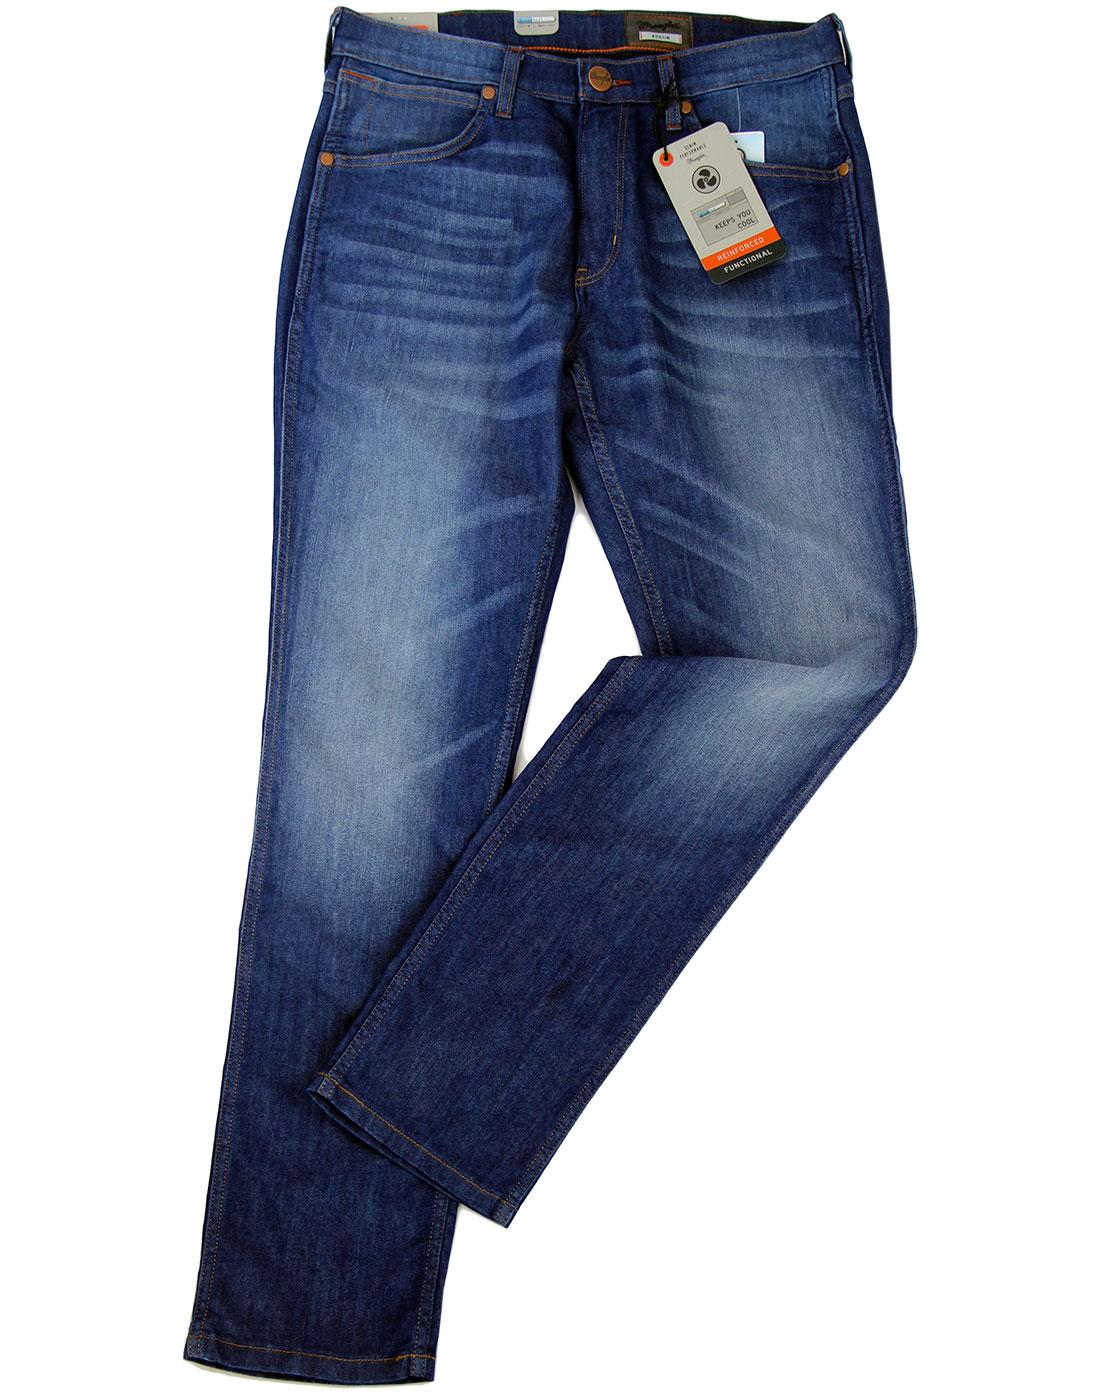 Wrangler Coolmax Jeans Giveaway!